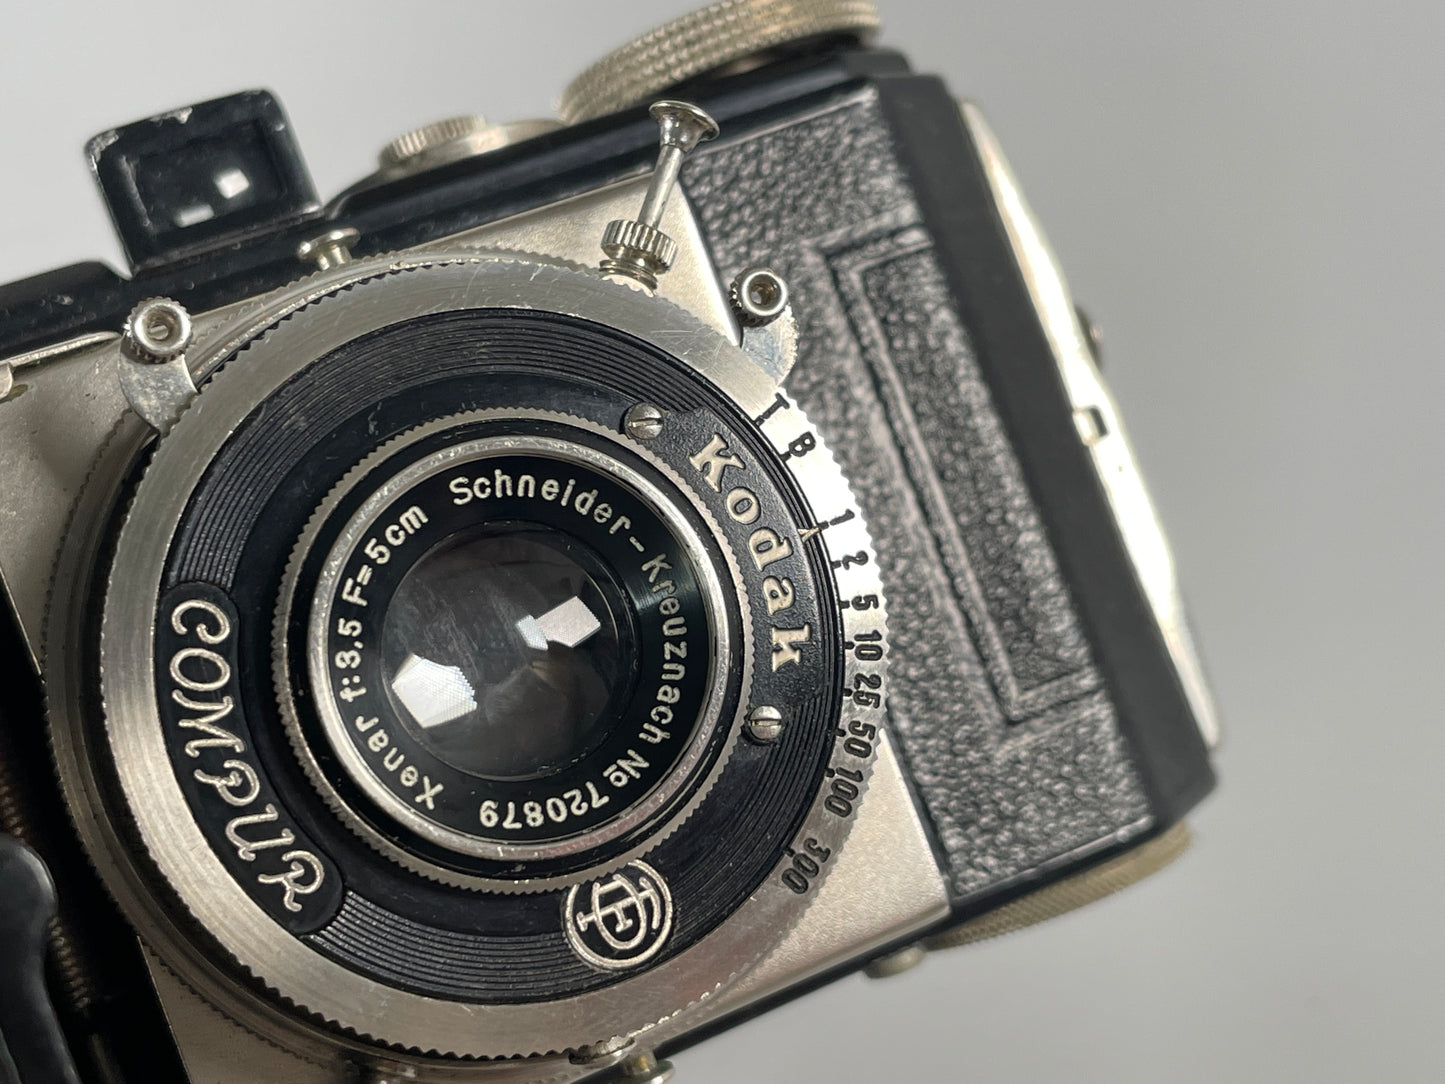 Kodak Retina Type 118 2nd model 35mm Camera Xenar 5cm f3.5 1935-36